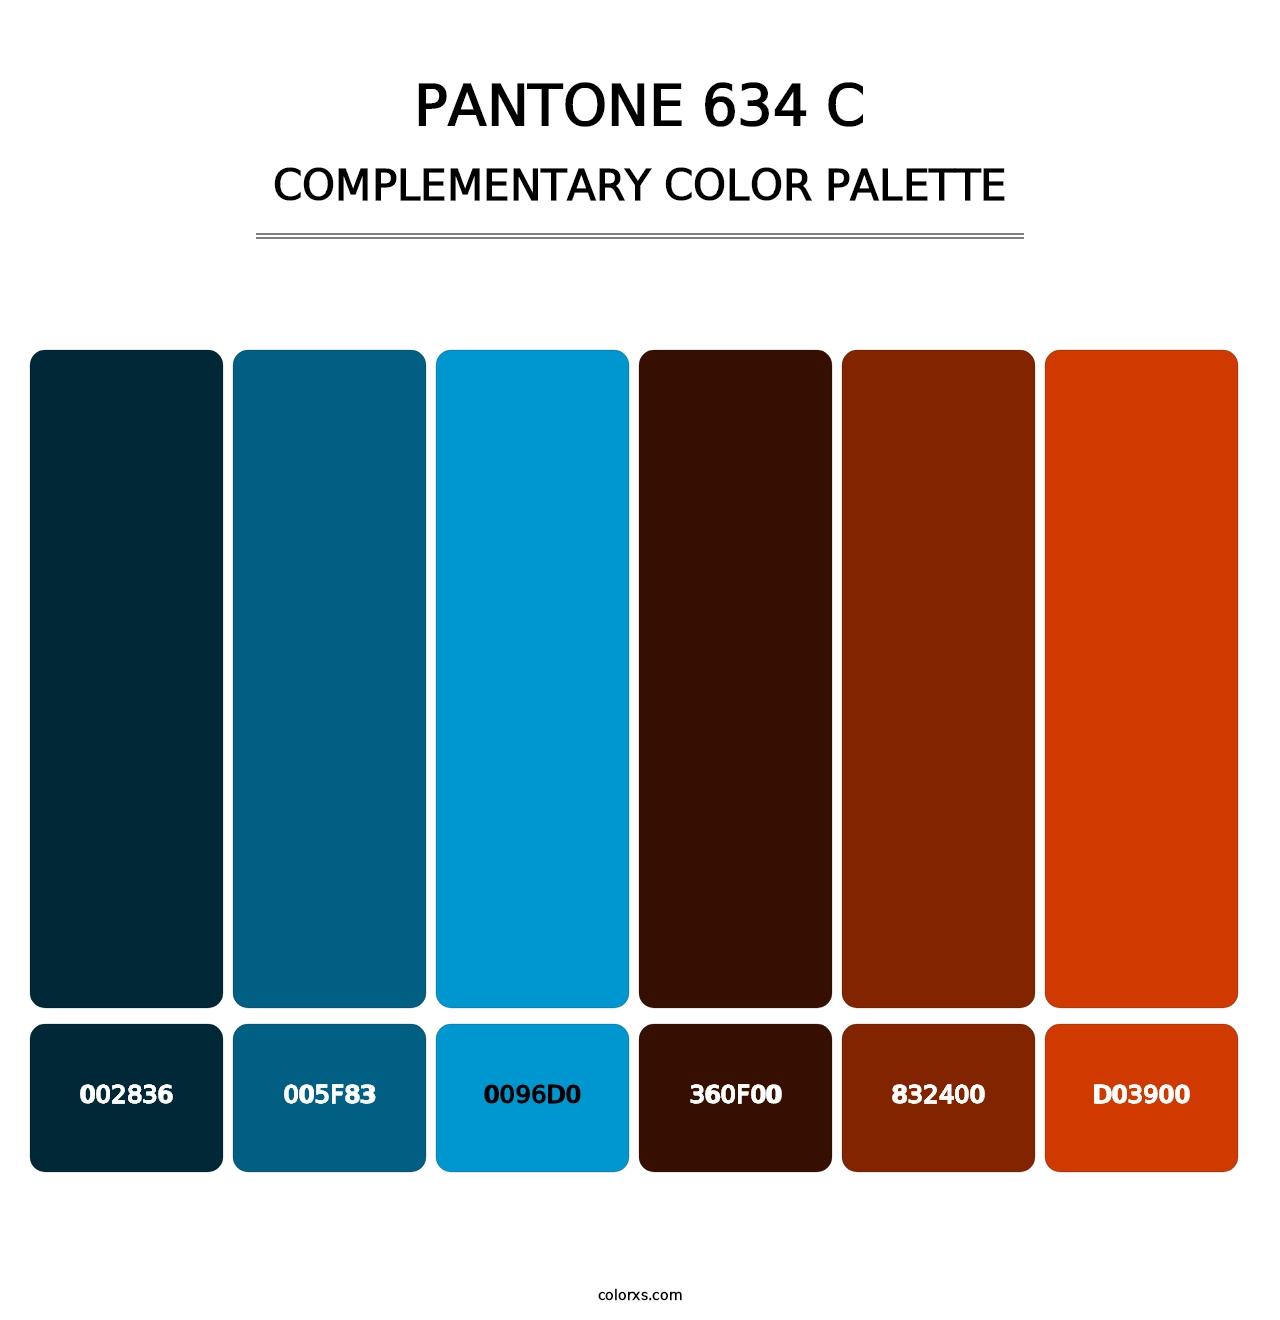 PANTONE 634 C - Complementary Color Palette